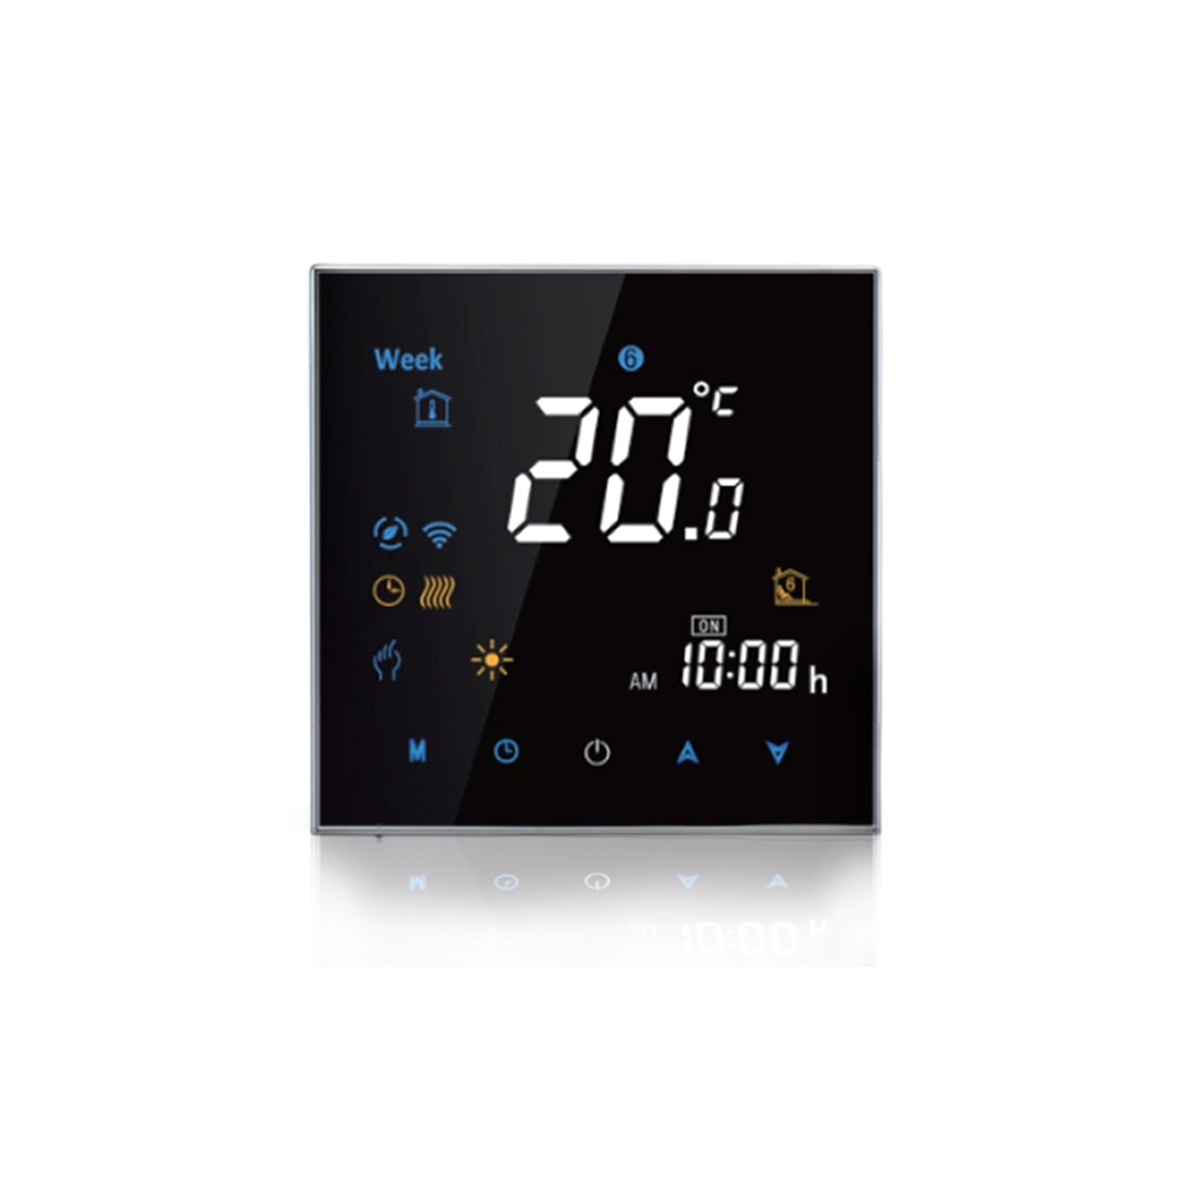 BHT-3000 Series Smart Heating Thermostat